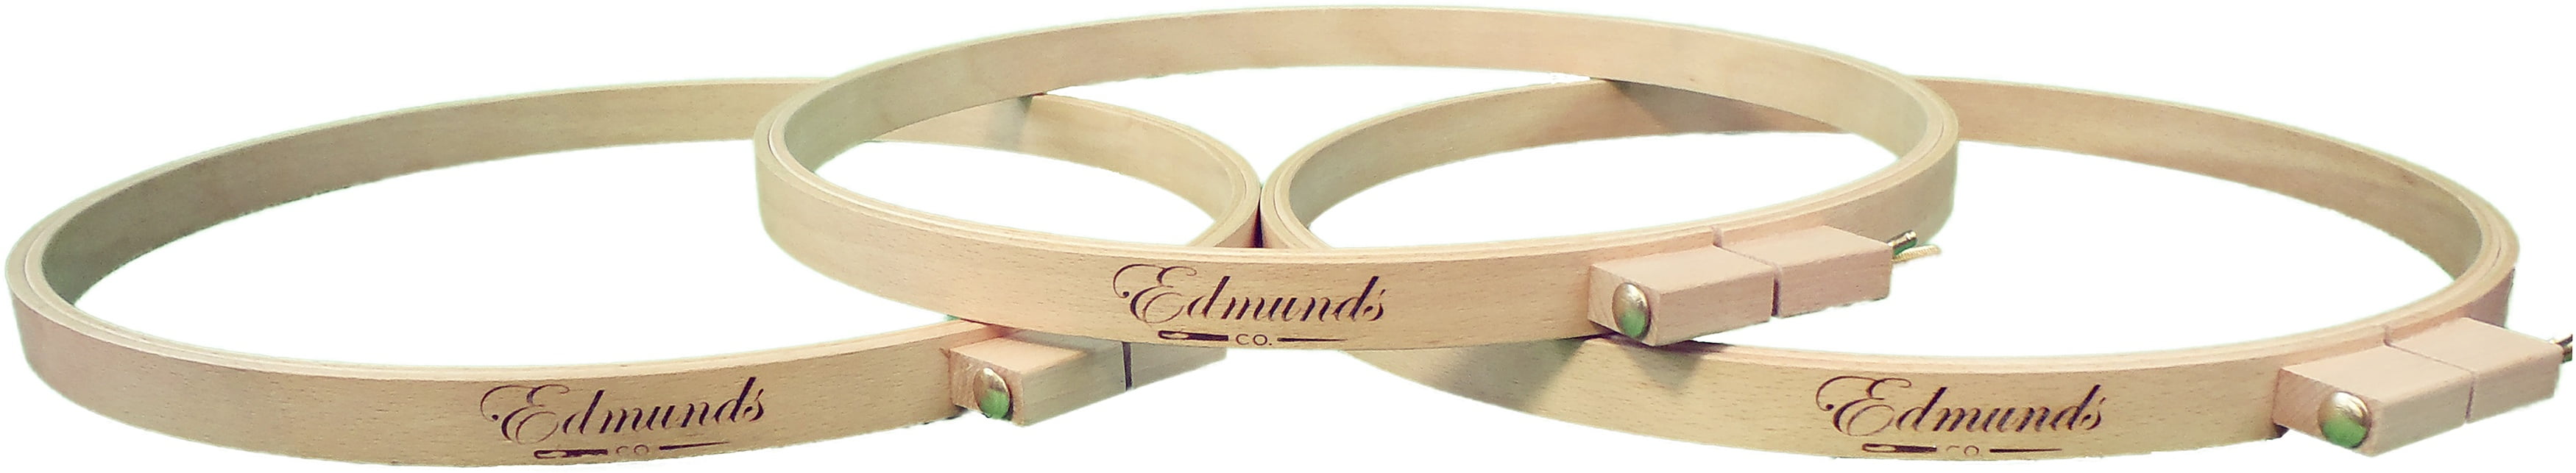 Edmunds Round Quilting Hoop 14